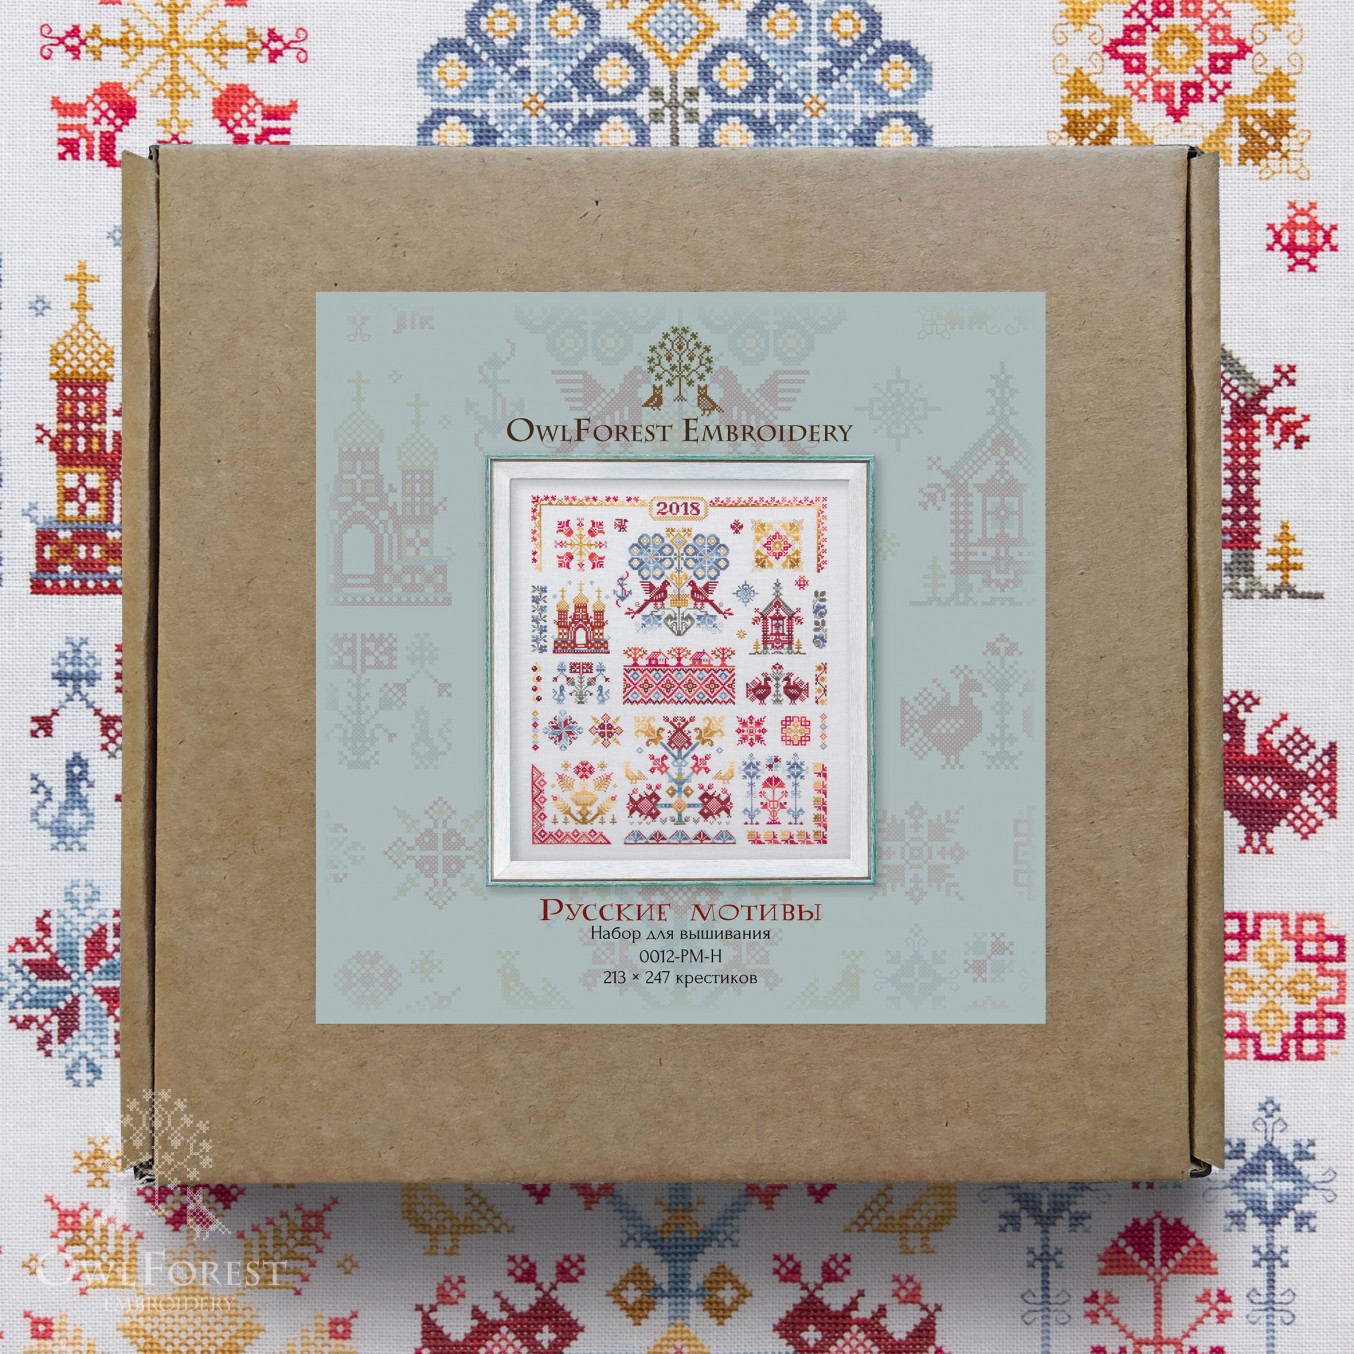 New Unopened Modern Cross Stitch Embroidery Kit Nizhny Novgorod City View by Russian Manufacture MP Studio Gift Gift Idea